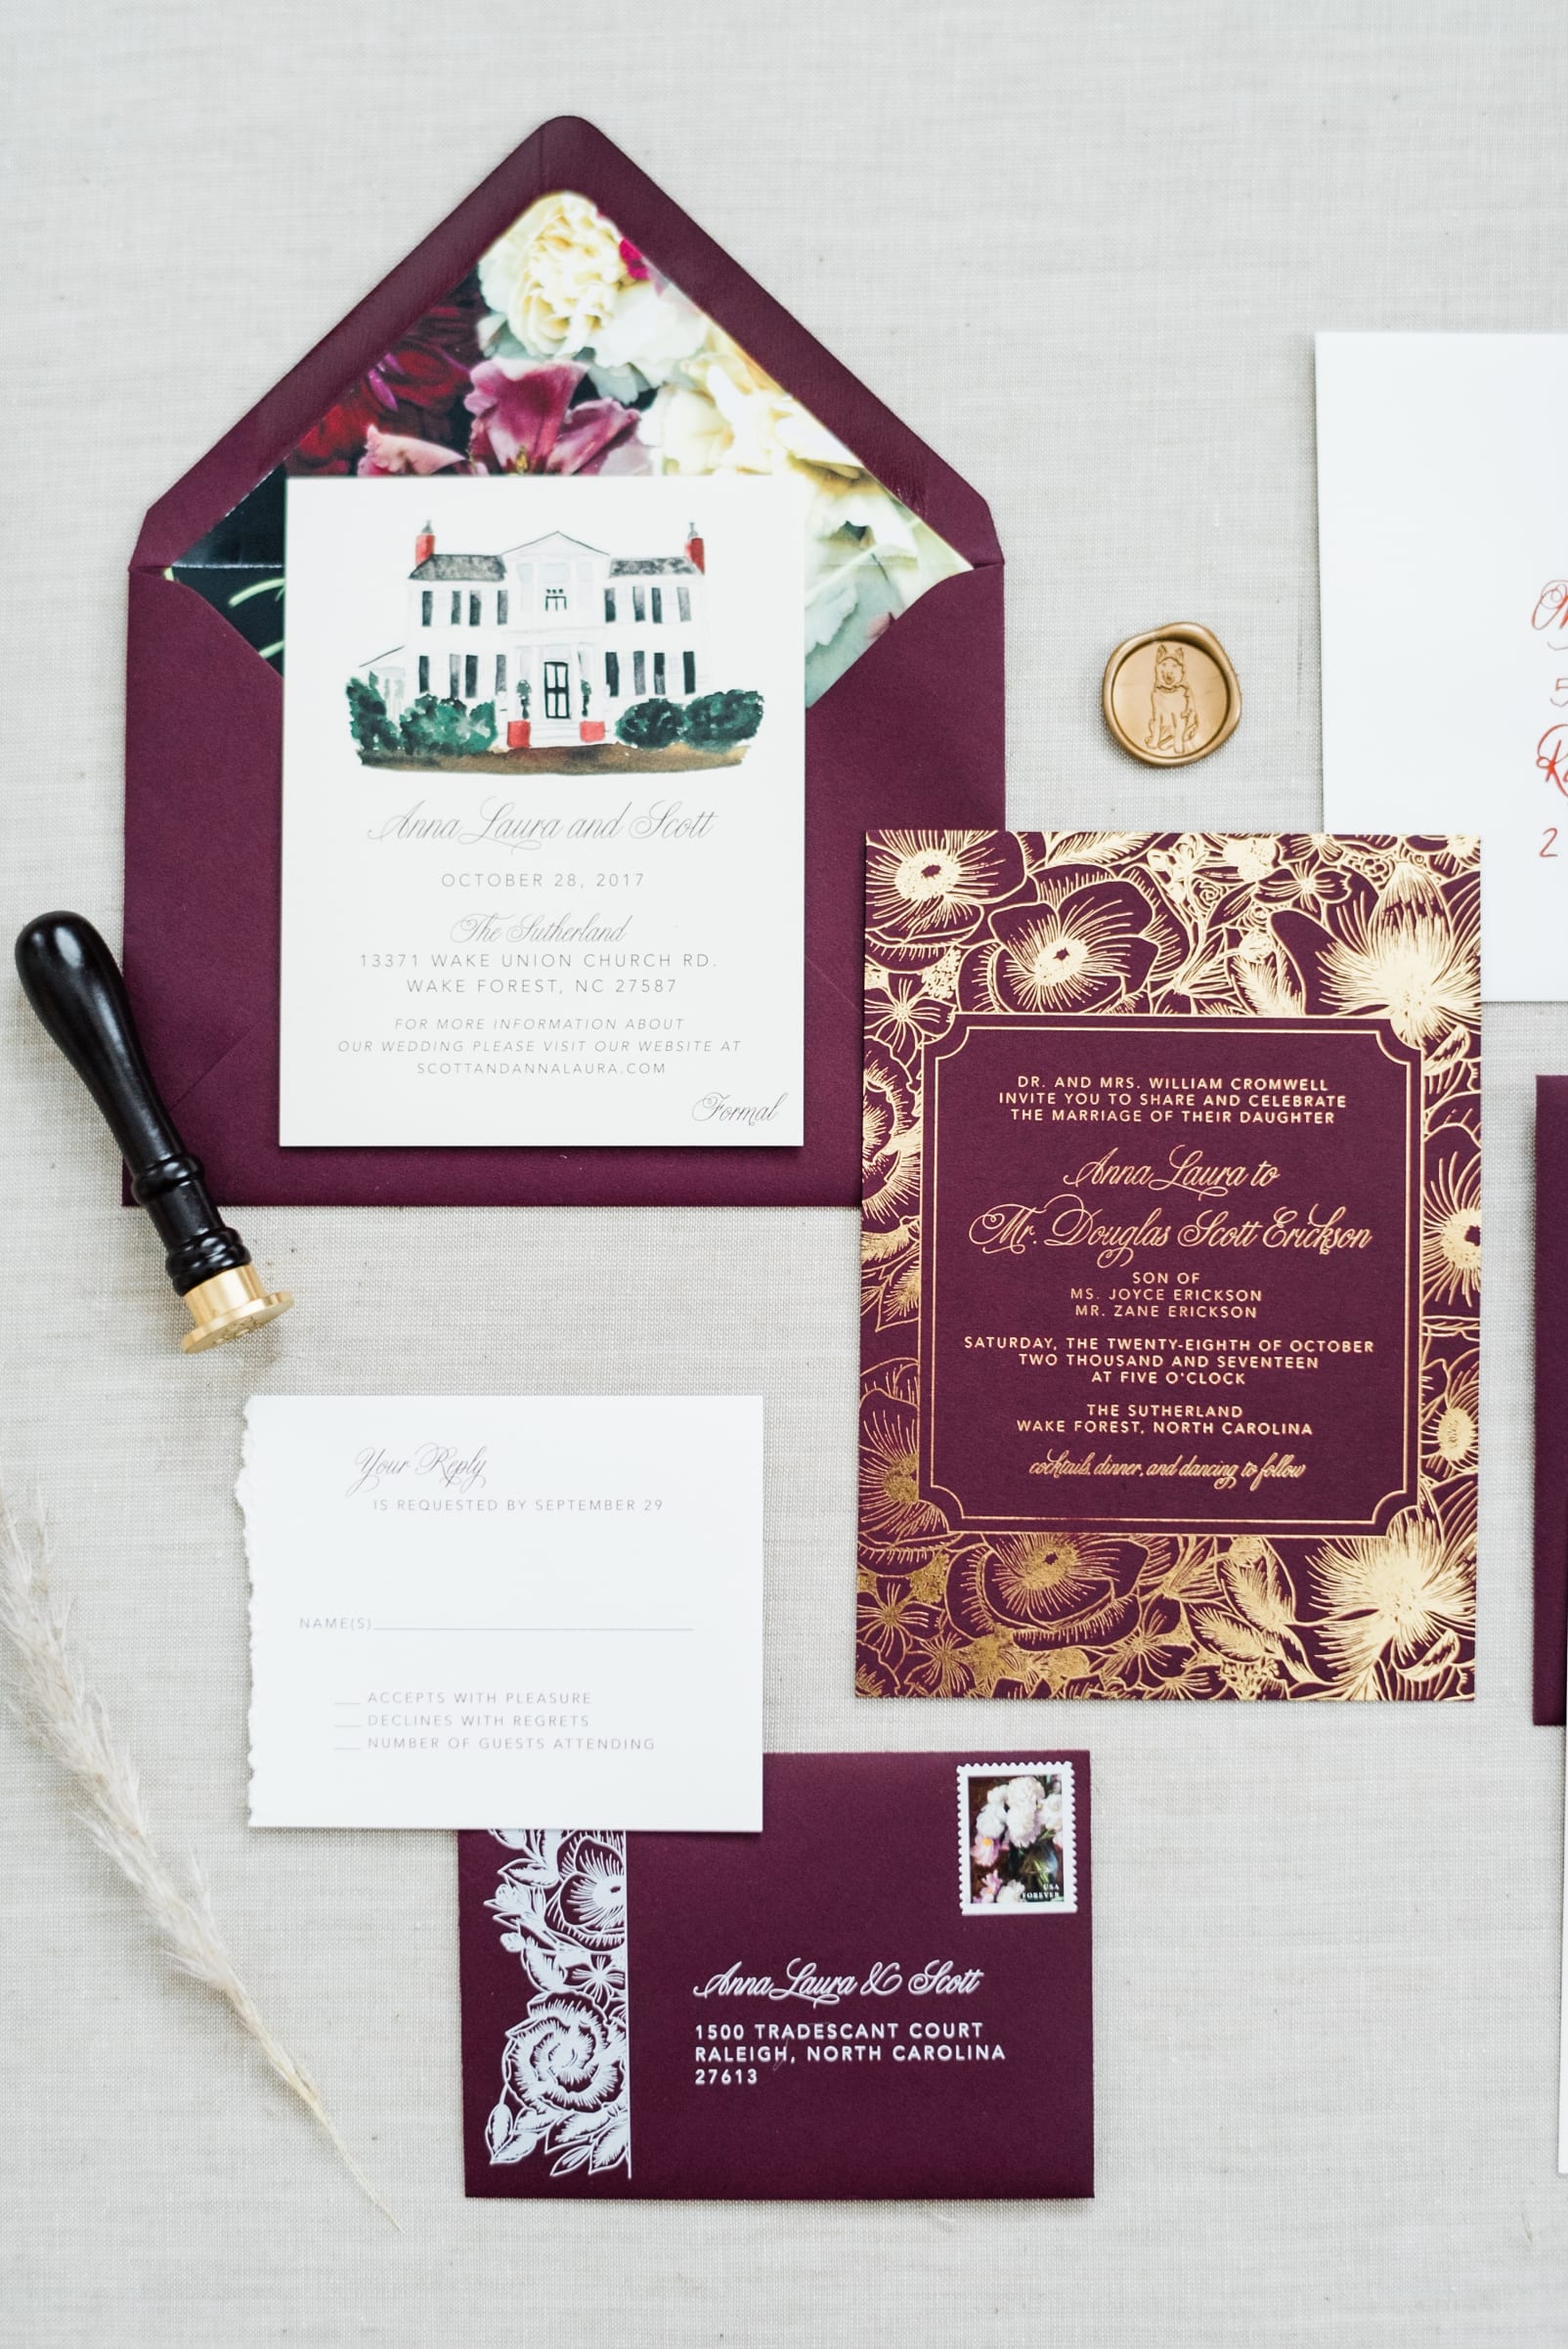 sutherland wake forest wedding photographer burgundy wedding invitation suite wax seal envelope liner photo